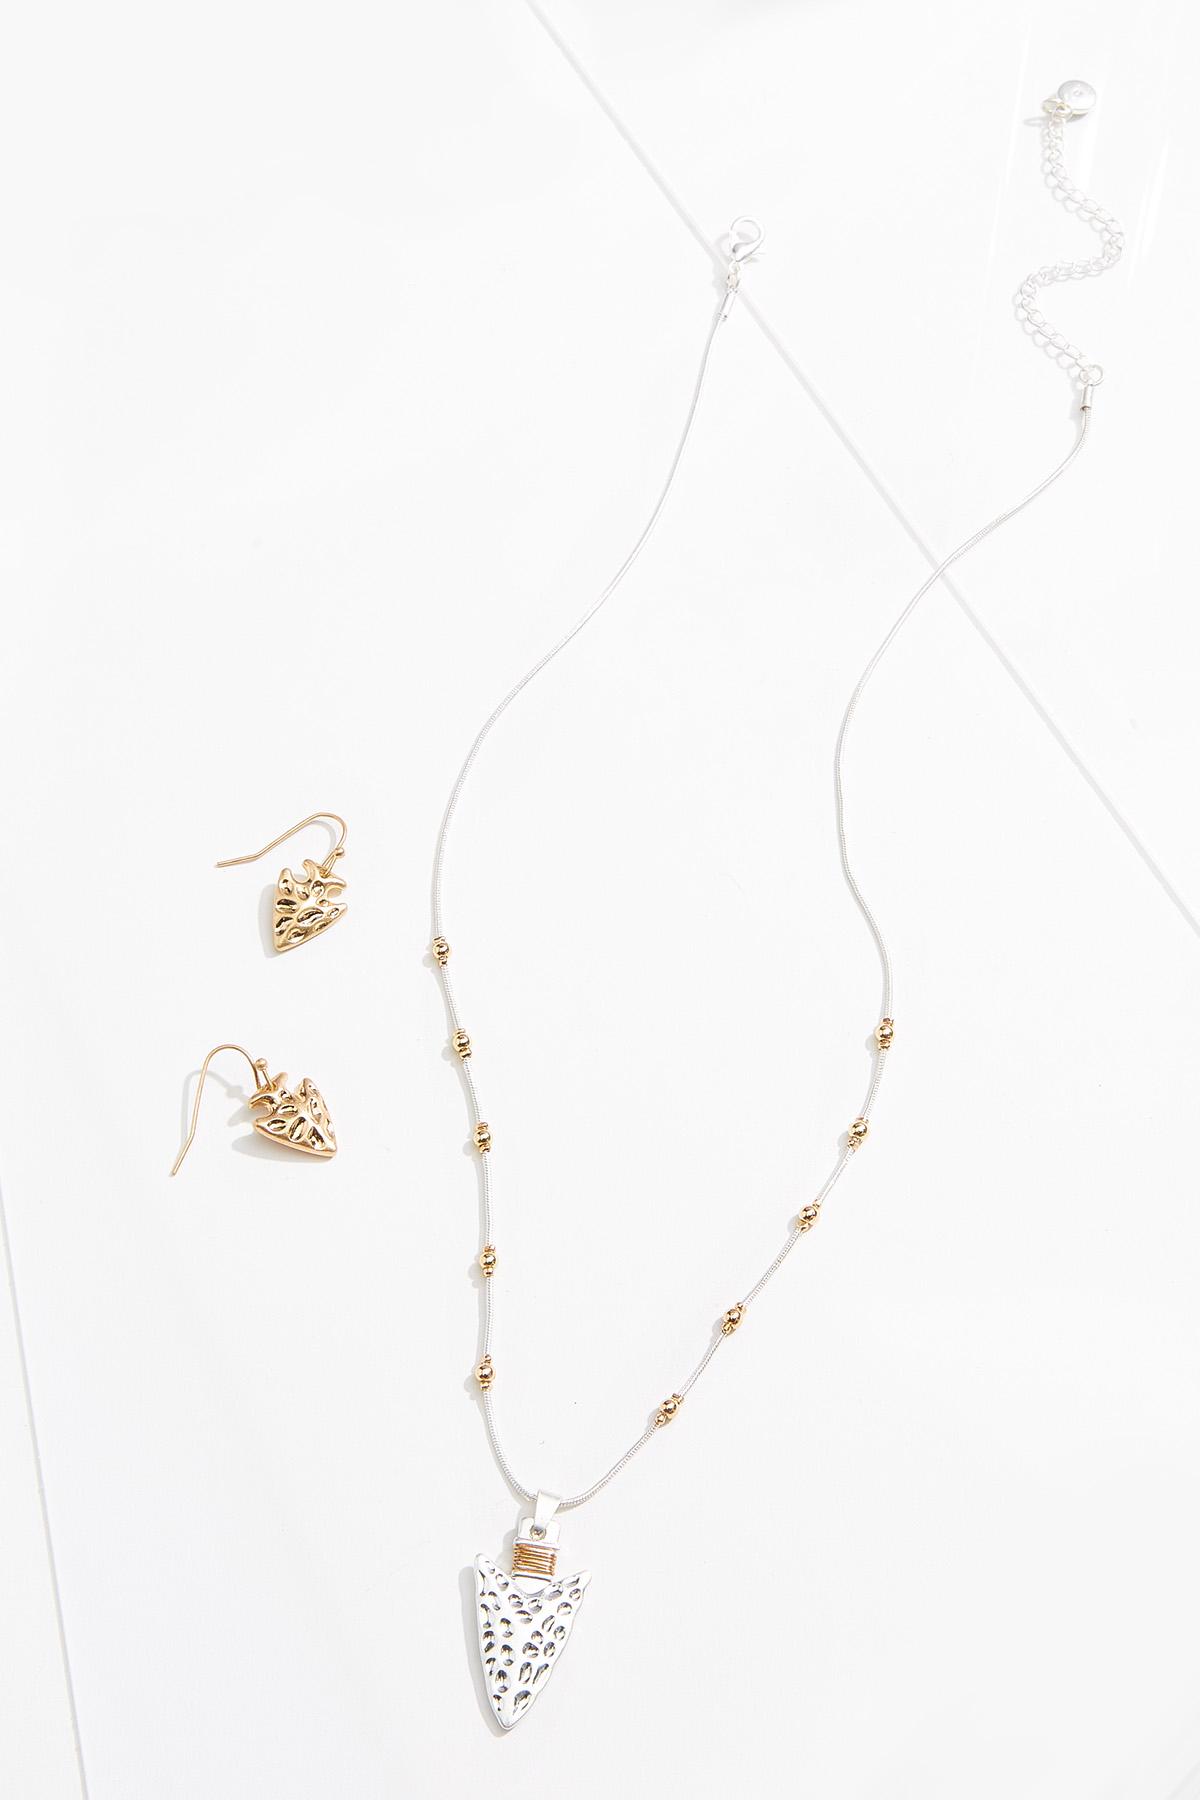 Arrowhead Necklace Earring Set